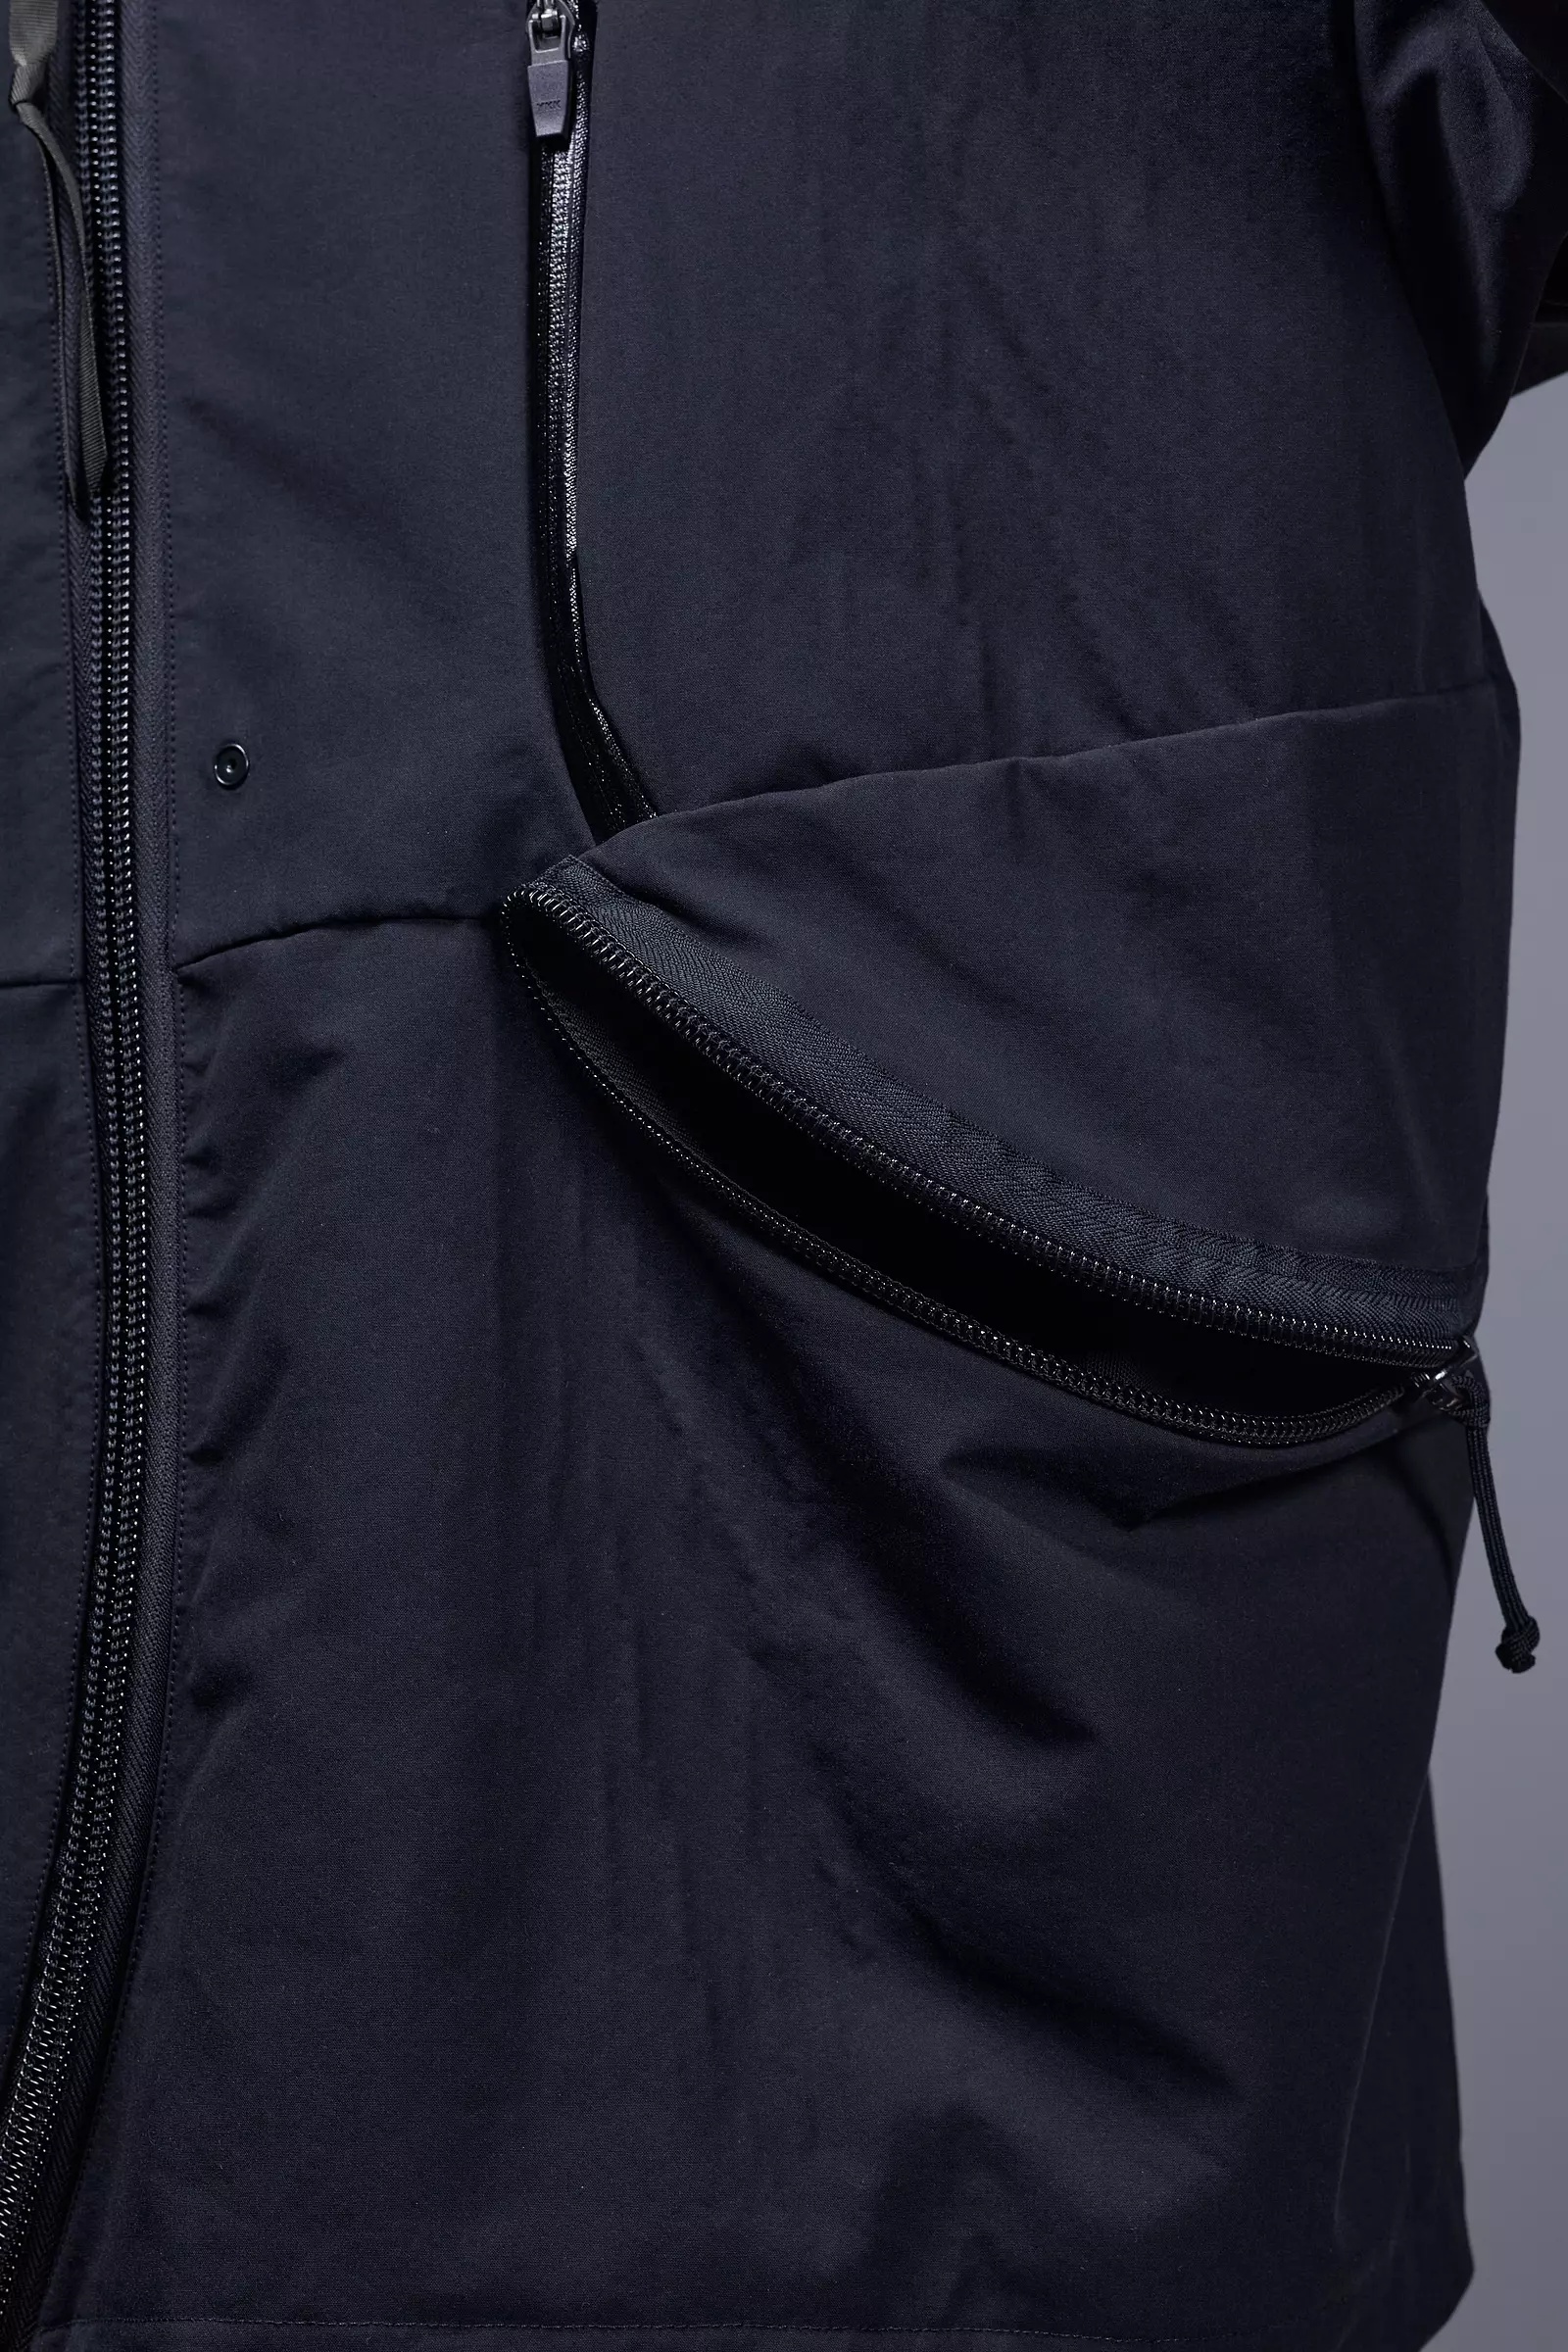 J113-SD Stotz® EtaProof™ Double Layer Weave Jacket Black - 29